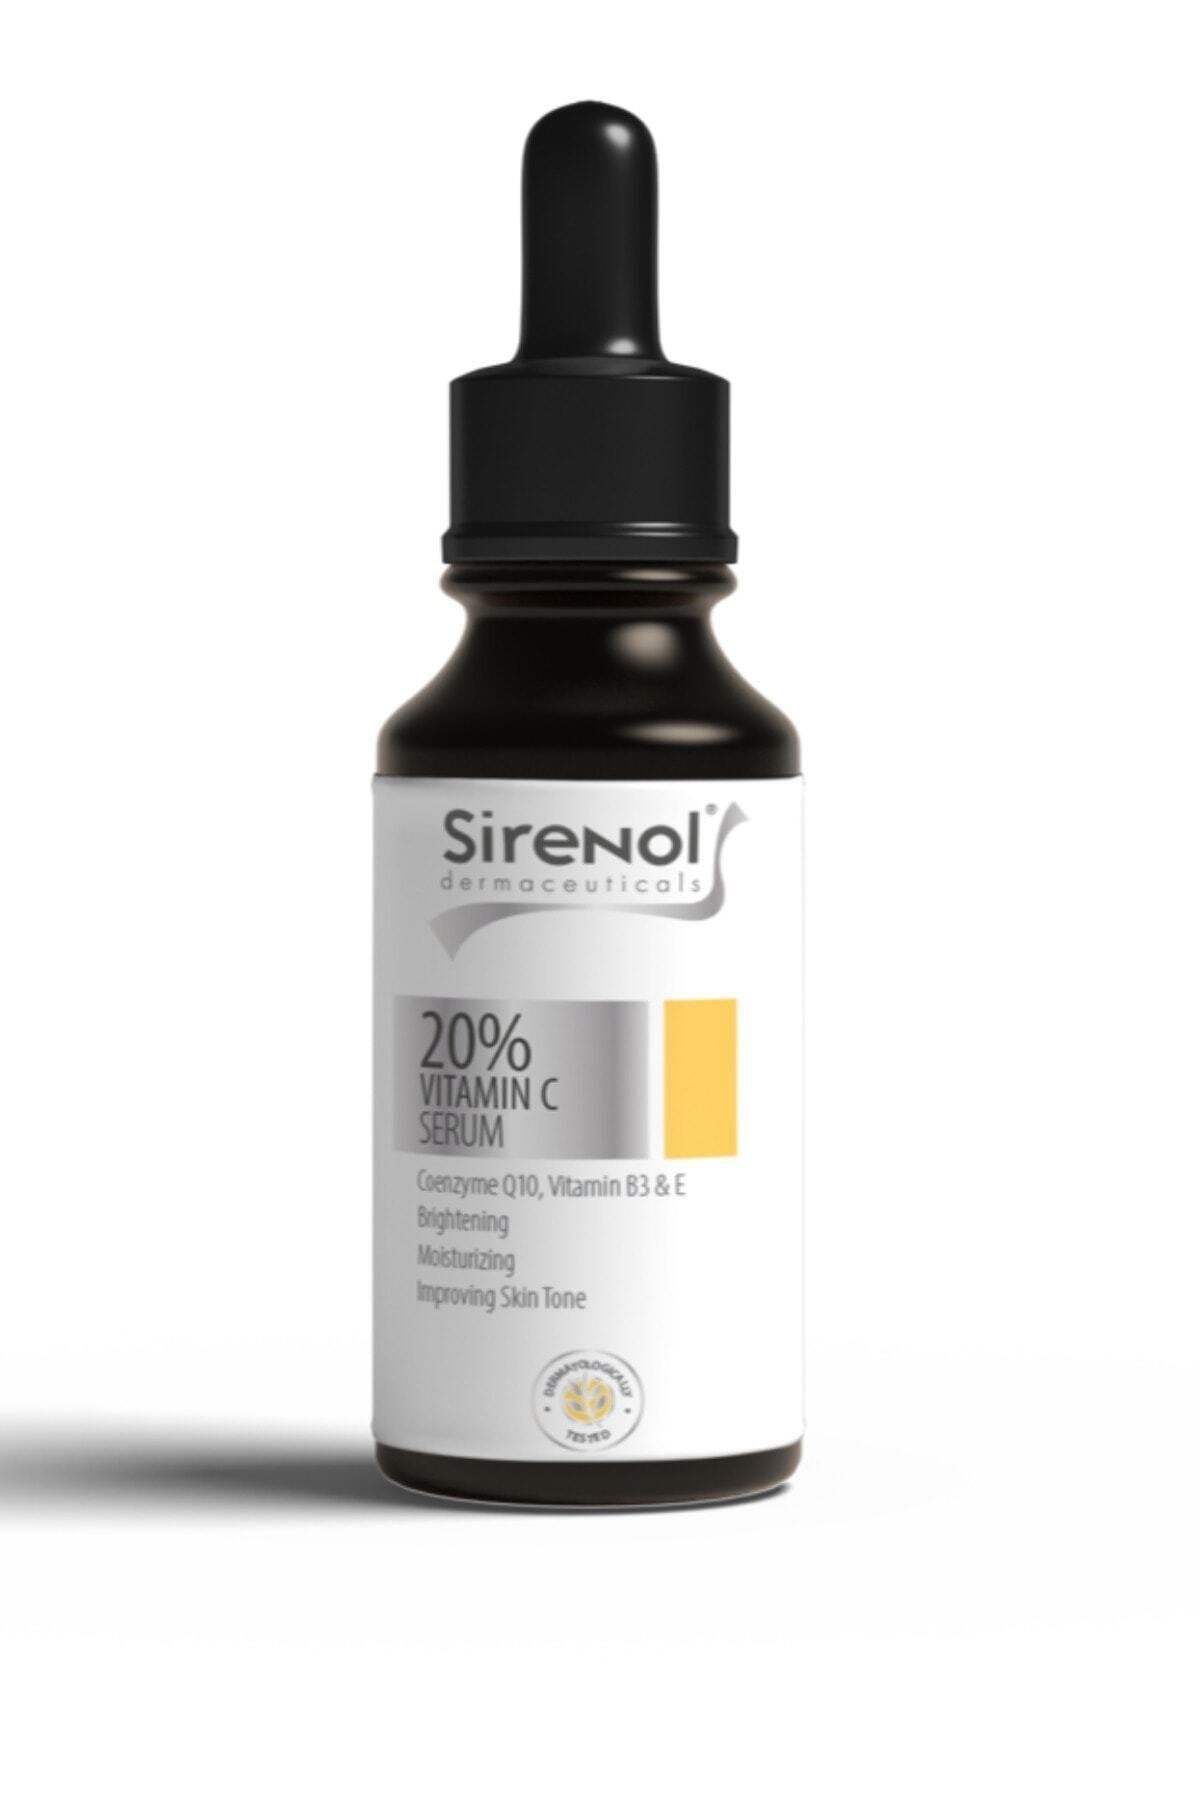 Sirenol %20 Vitamin C Serum 30 Ml